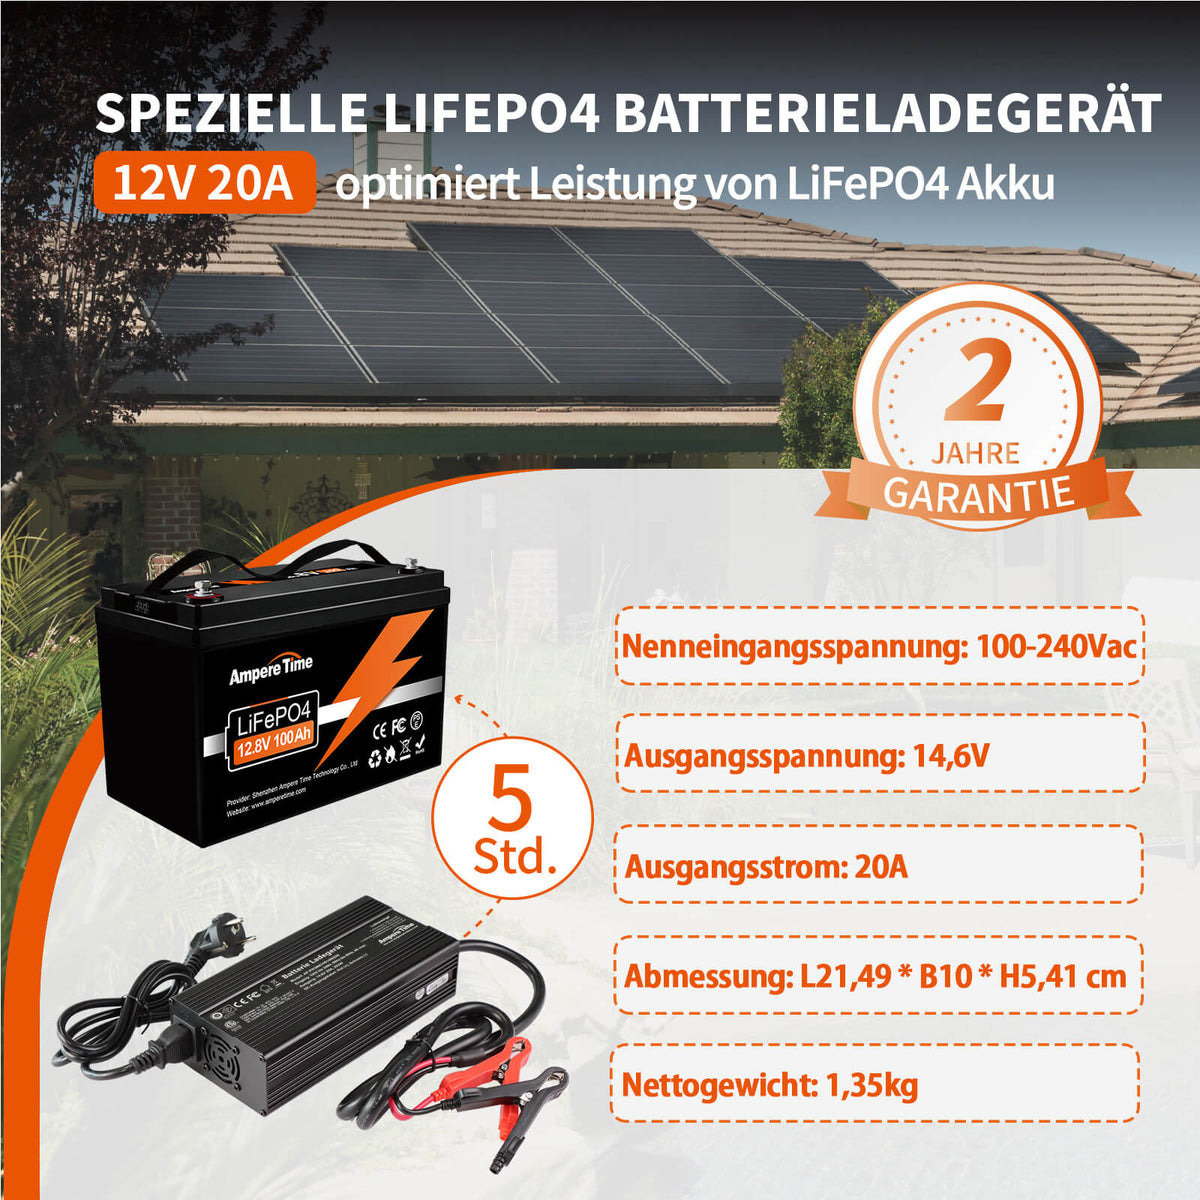 Ampere Time 29.2V 20A LiFePO4 Batterieladegerät lifepo4 ladegerät